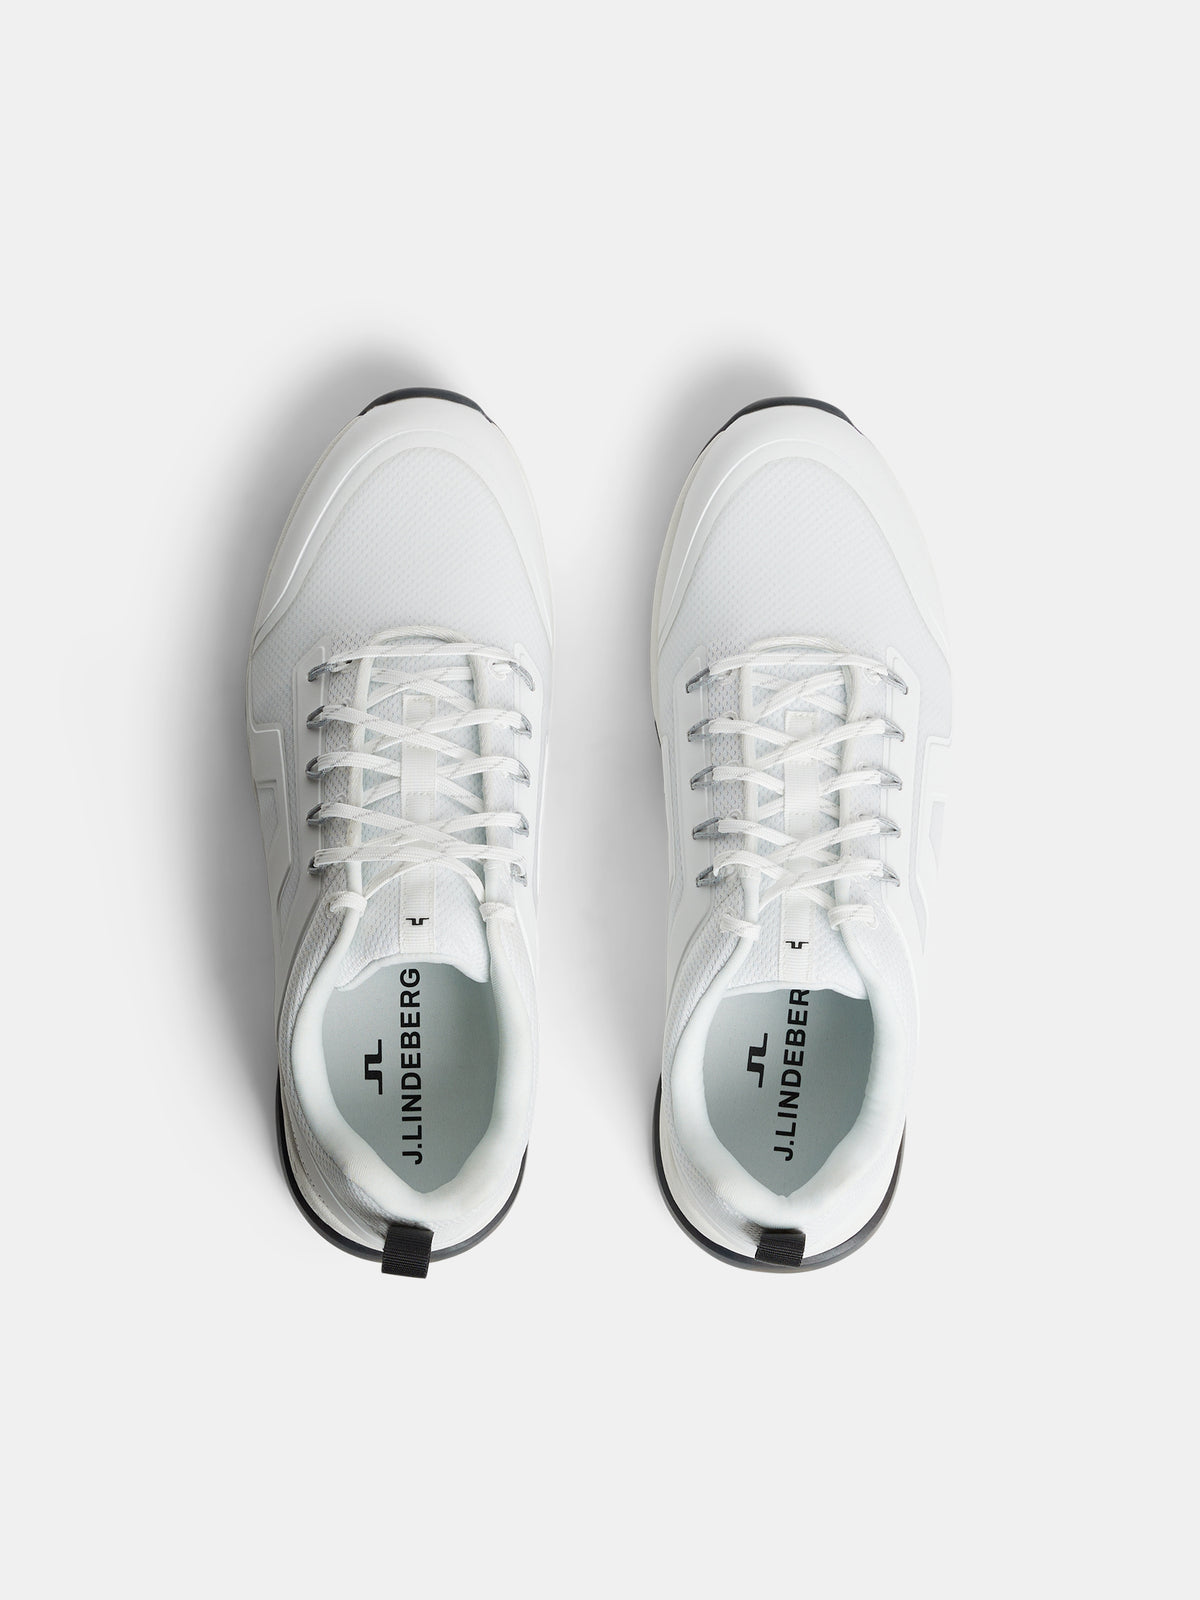 Range Finder Golf Sneaker / White